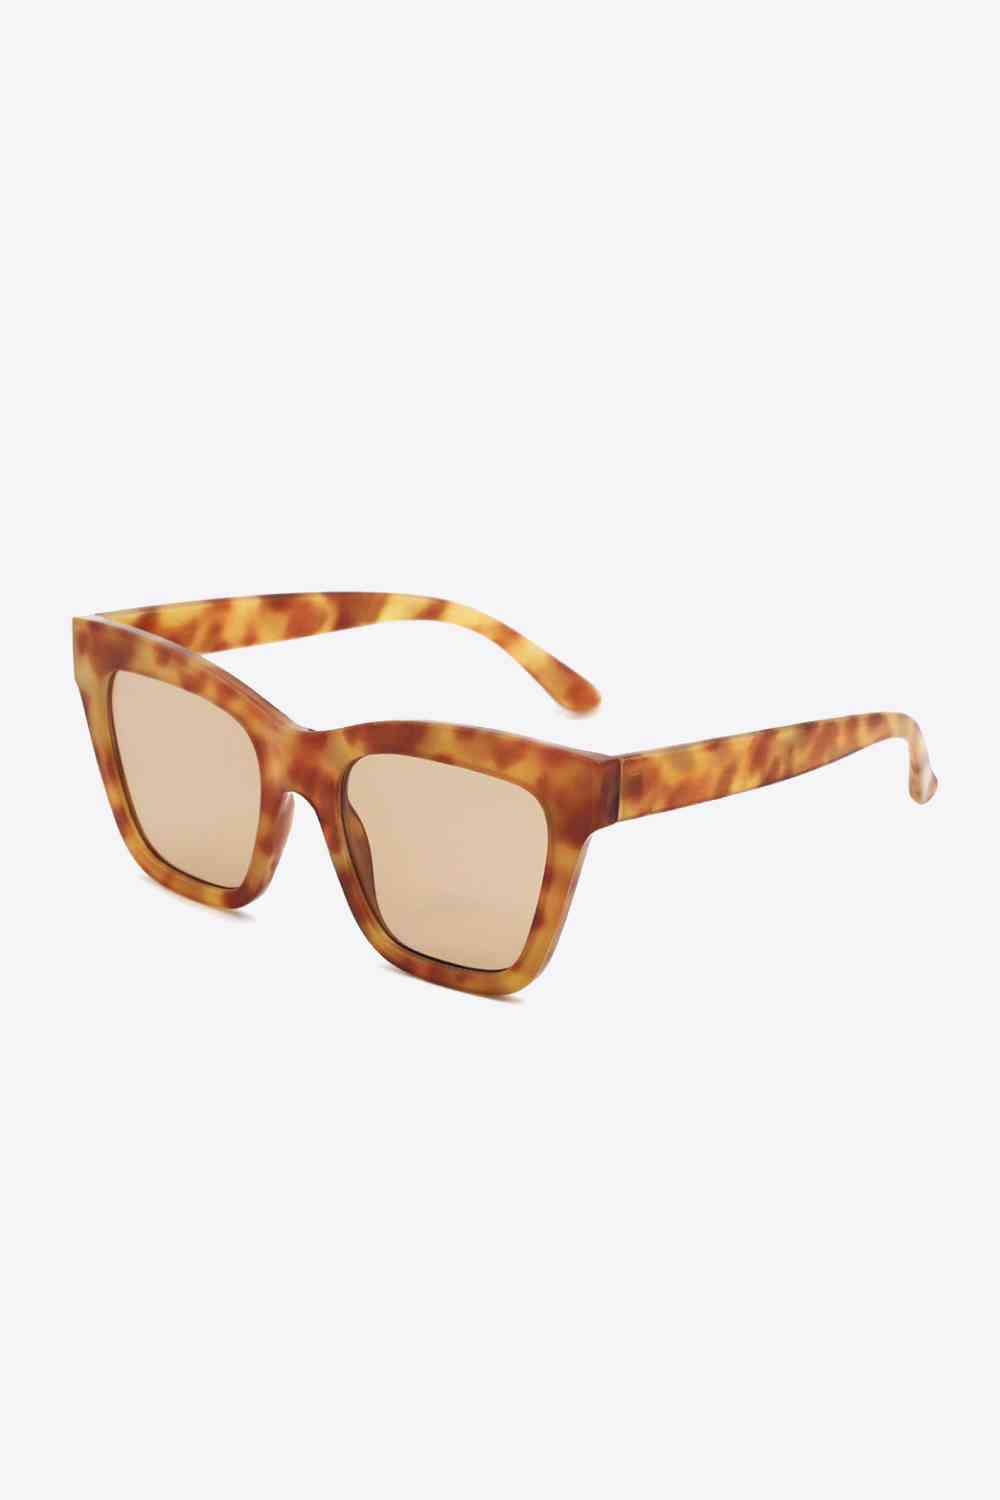 TEEK - Art Clash Sunglasses EYEGLASSES TEEK Trend Caramel  